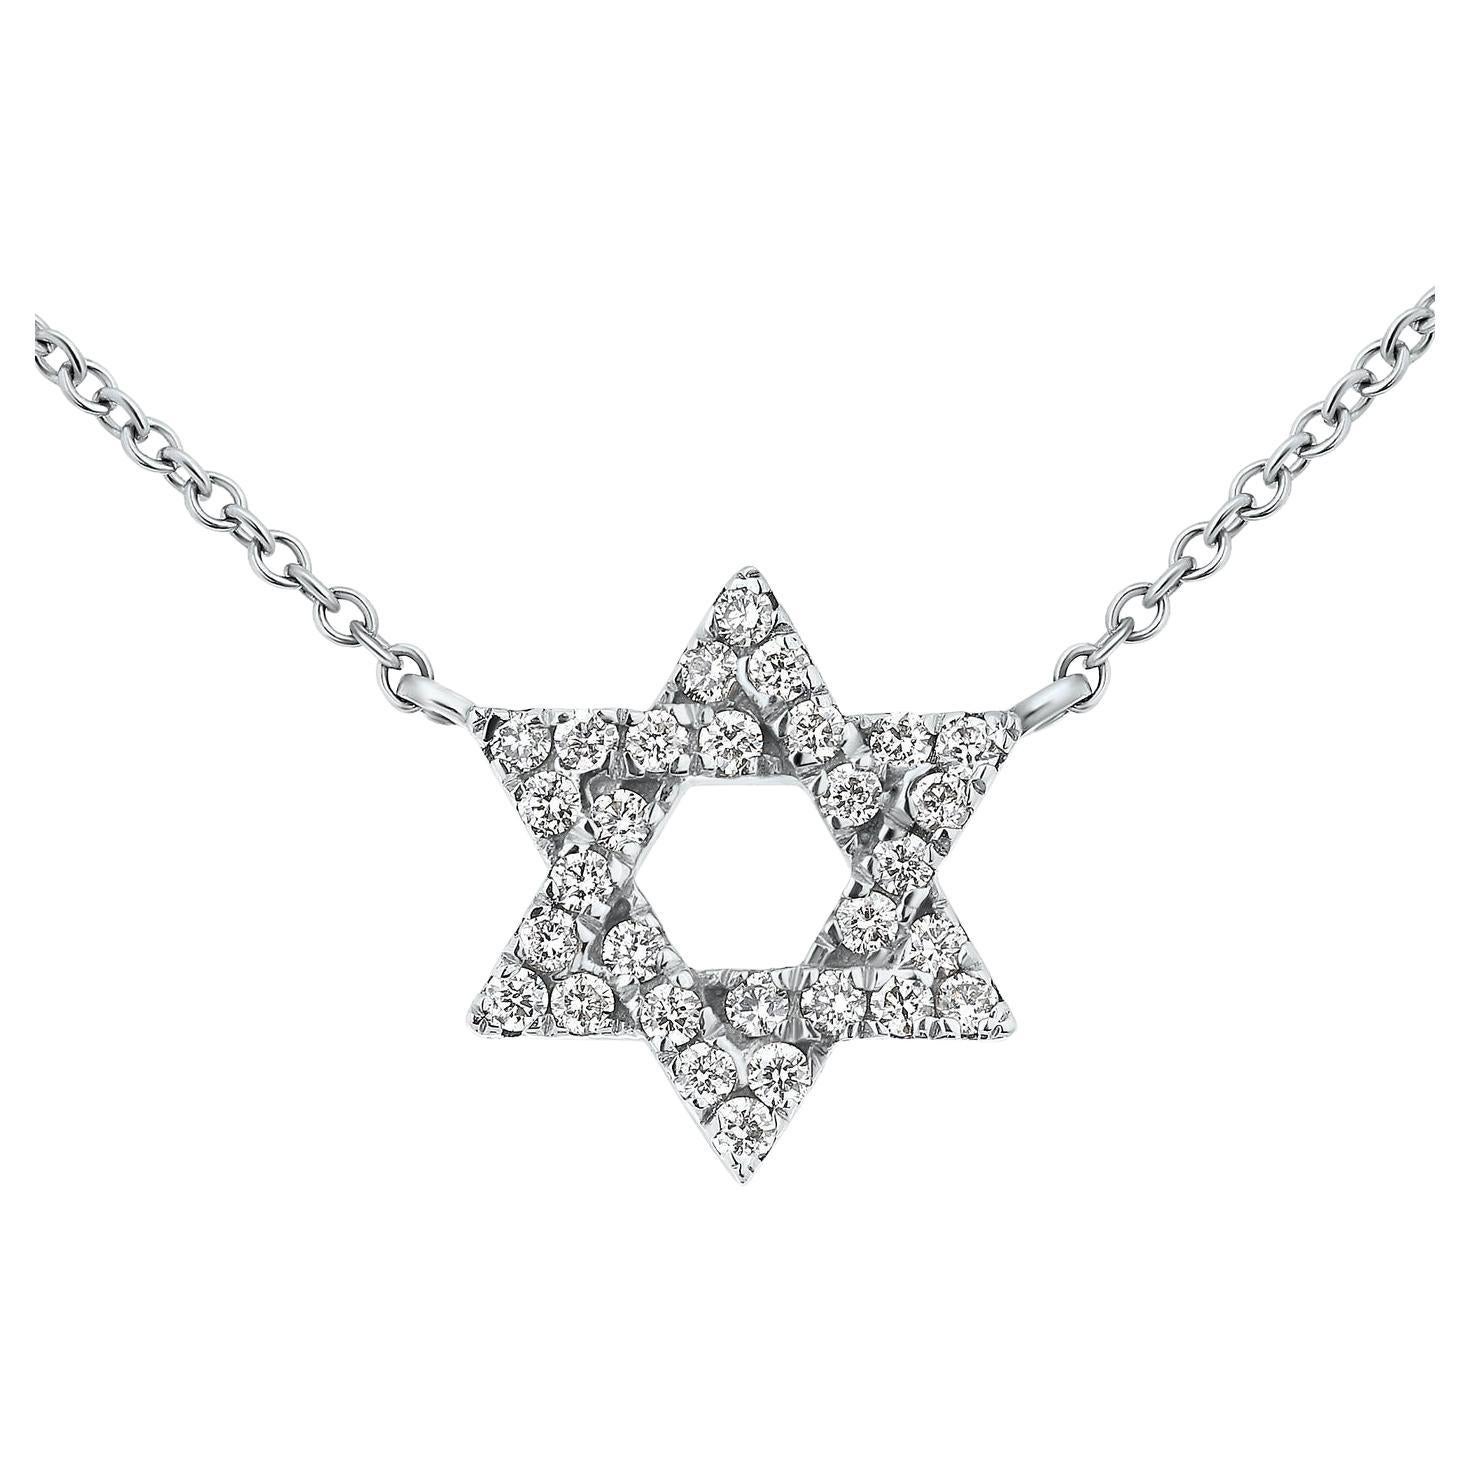 0.18 Carat Diamond Star of David Pendant Necklace in 14 Karat White Gold